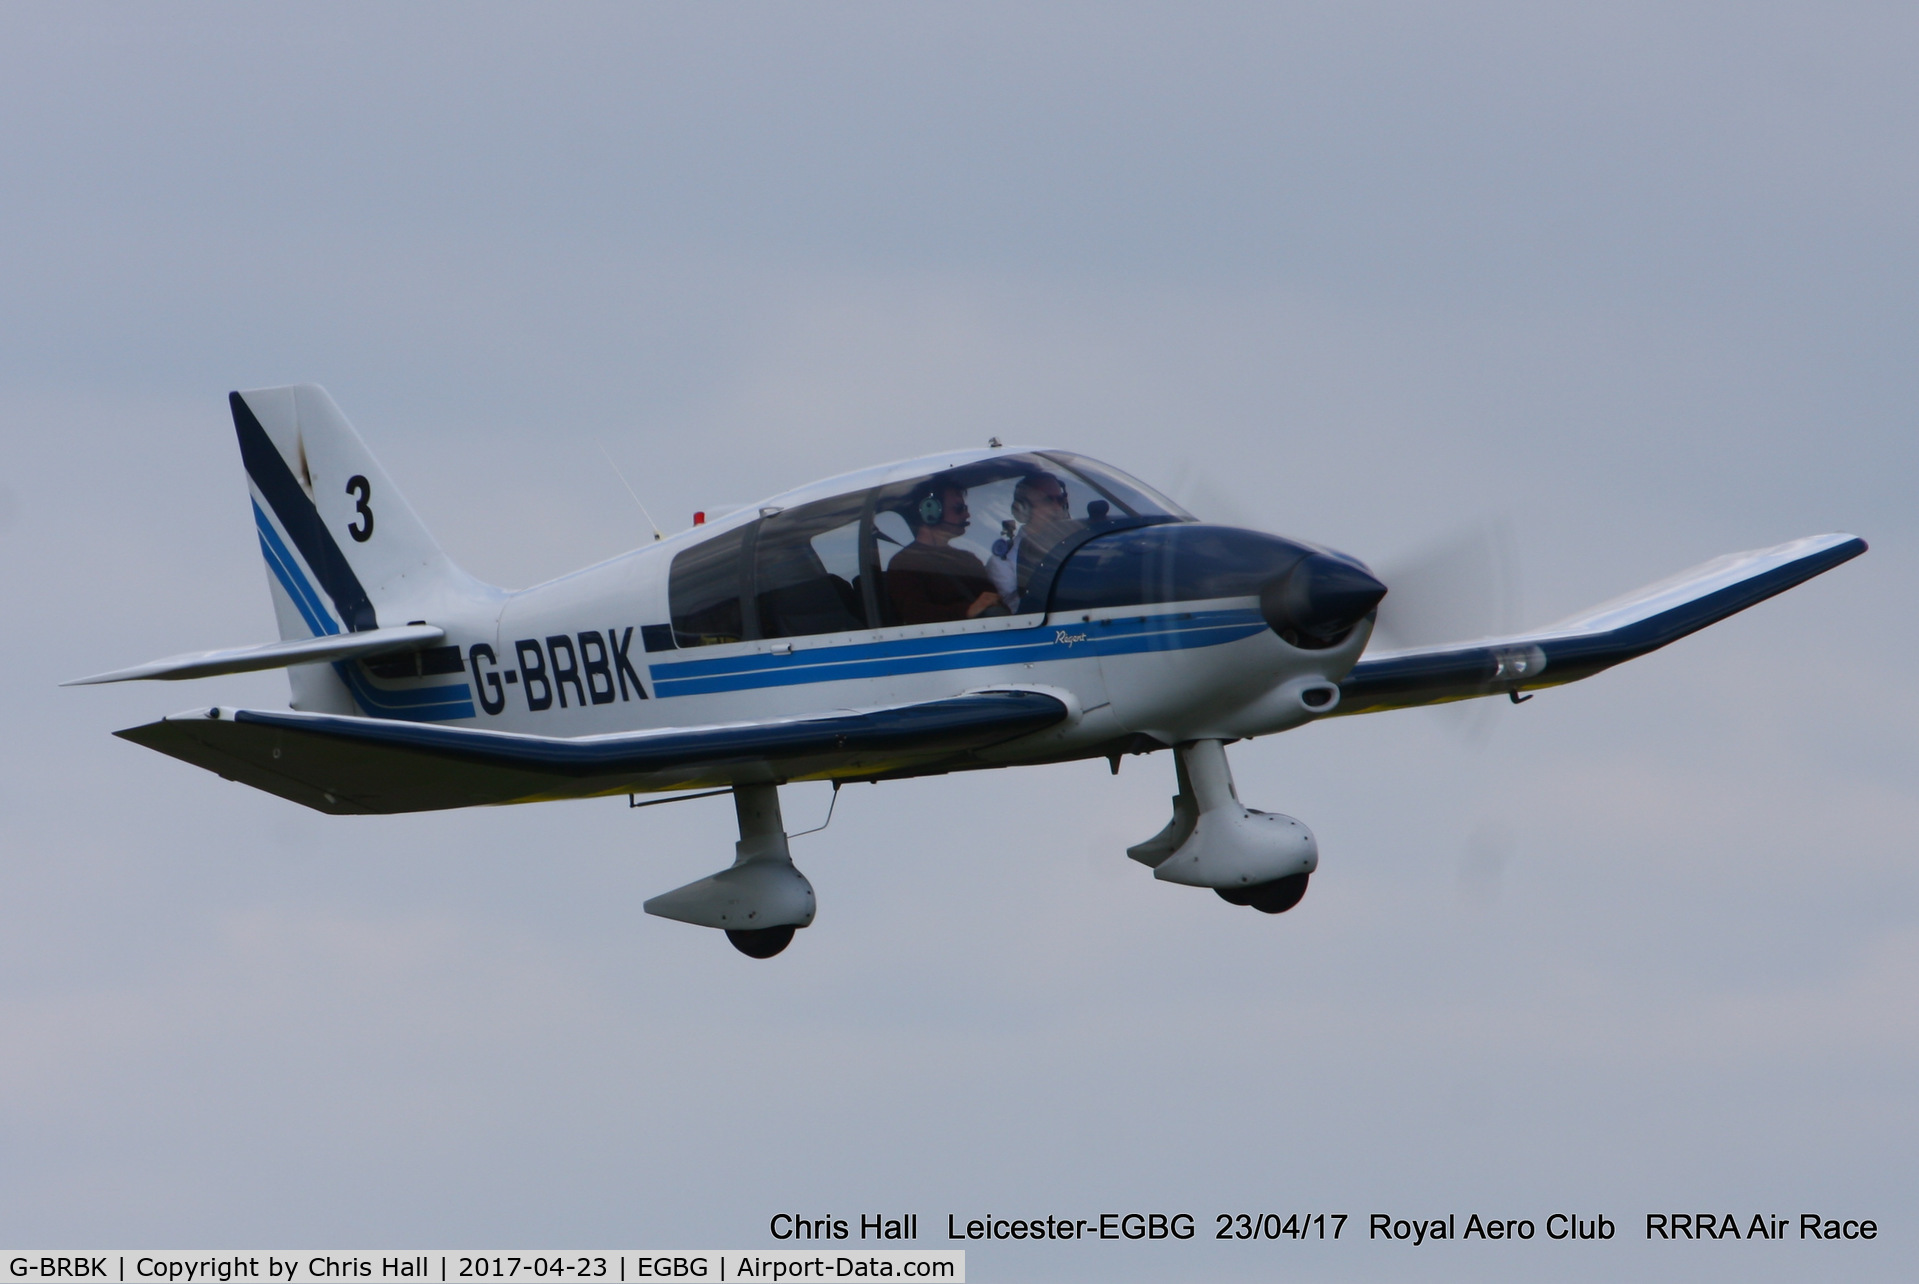 G-BRBK, 1989 Robin DR-400-180 Regent Regent C/N 1915, Royal Aero Club 3R's air race at Leicester